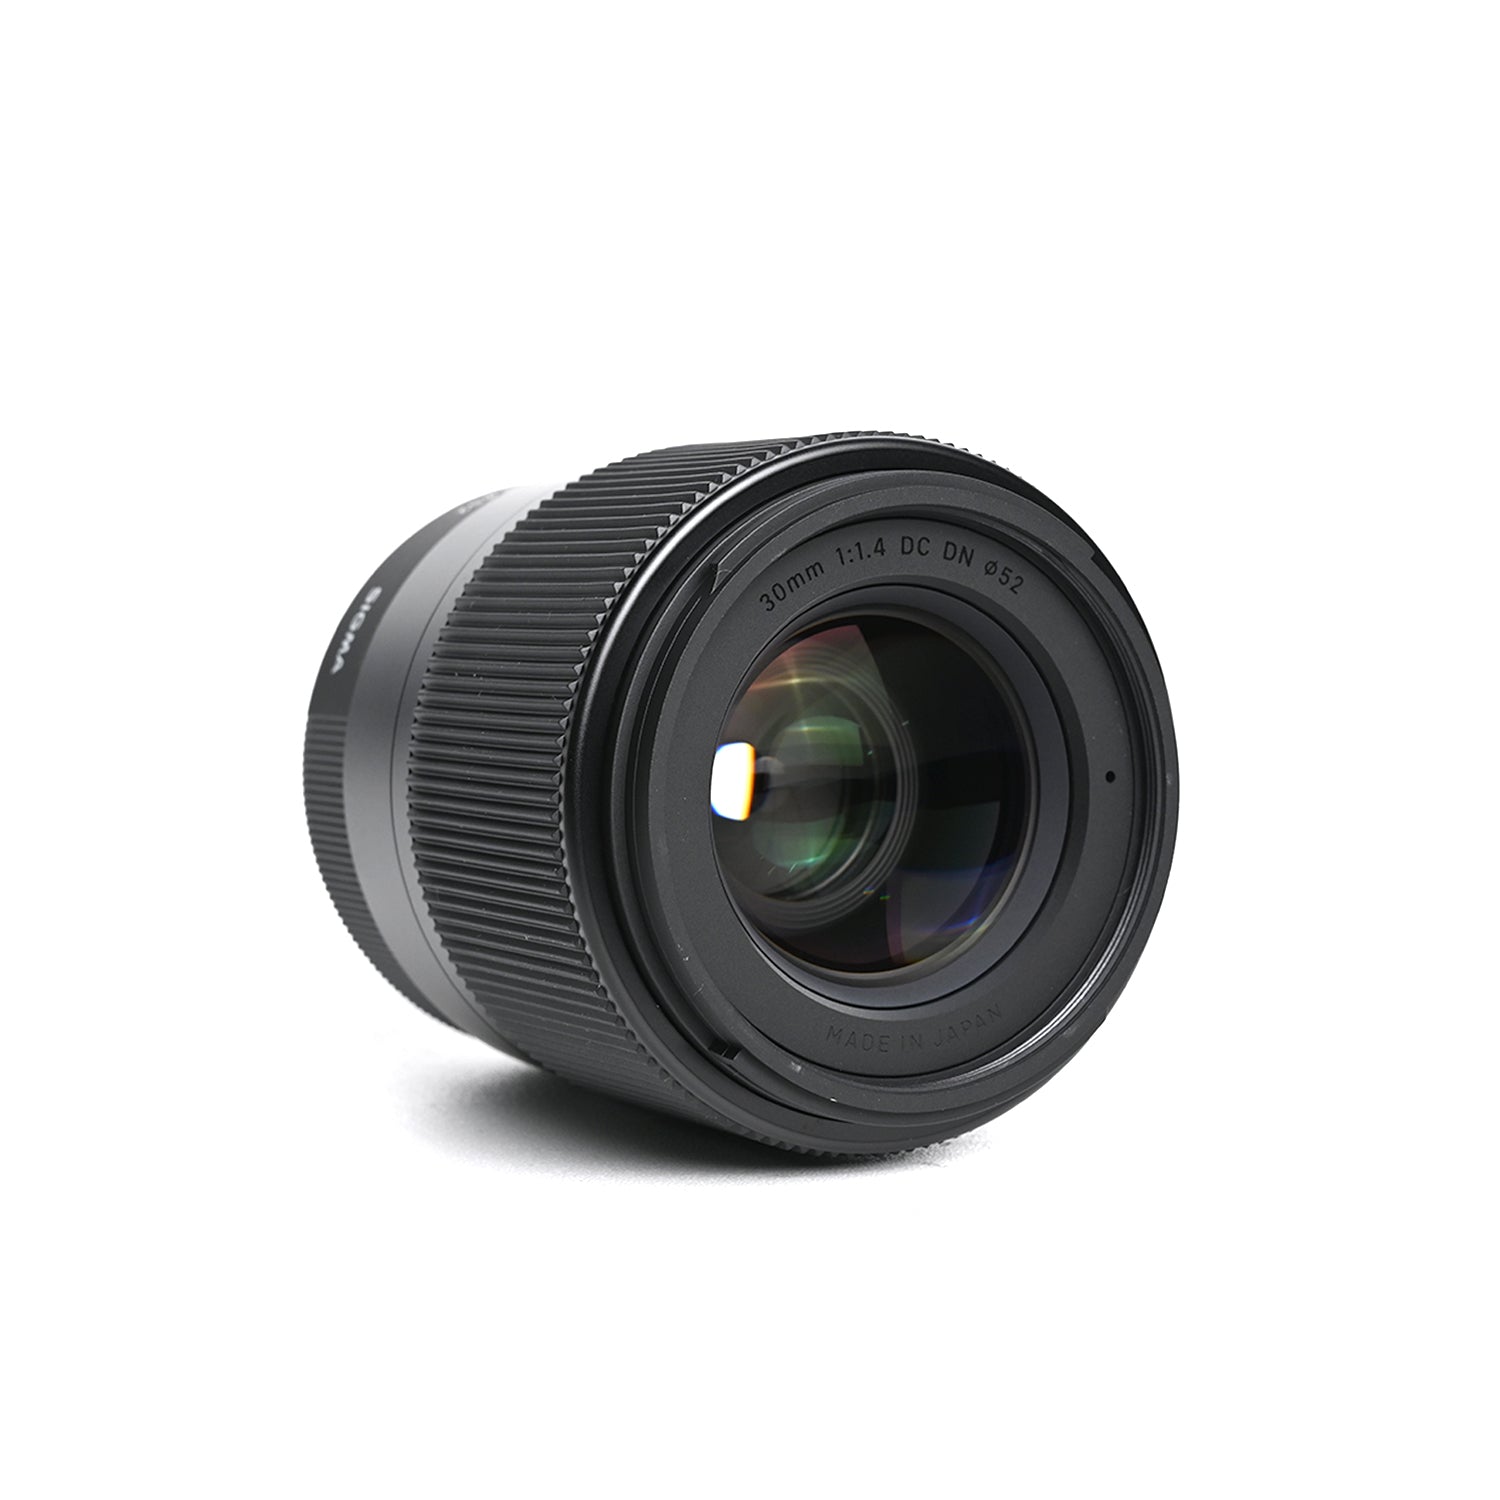 Sigma 30mm f/1.4 DC DN Contemporary Lens